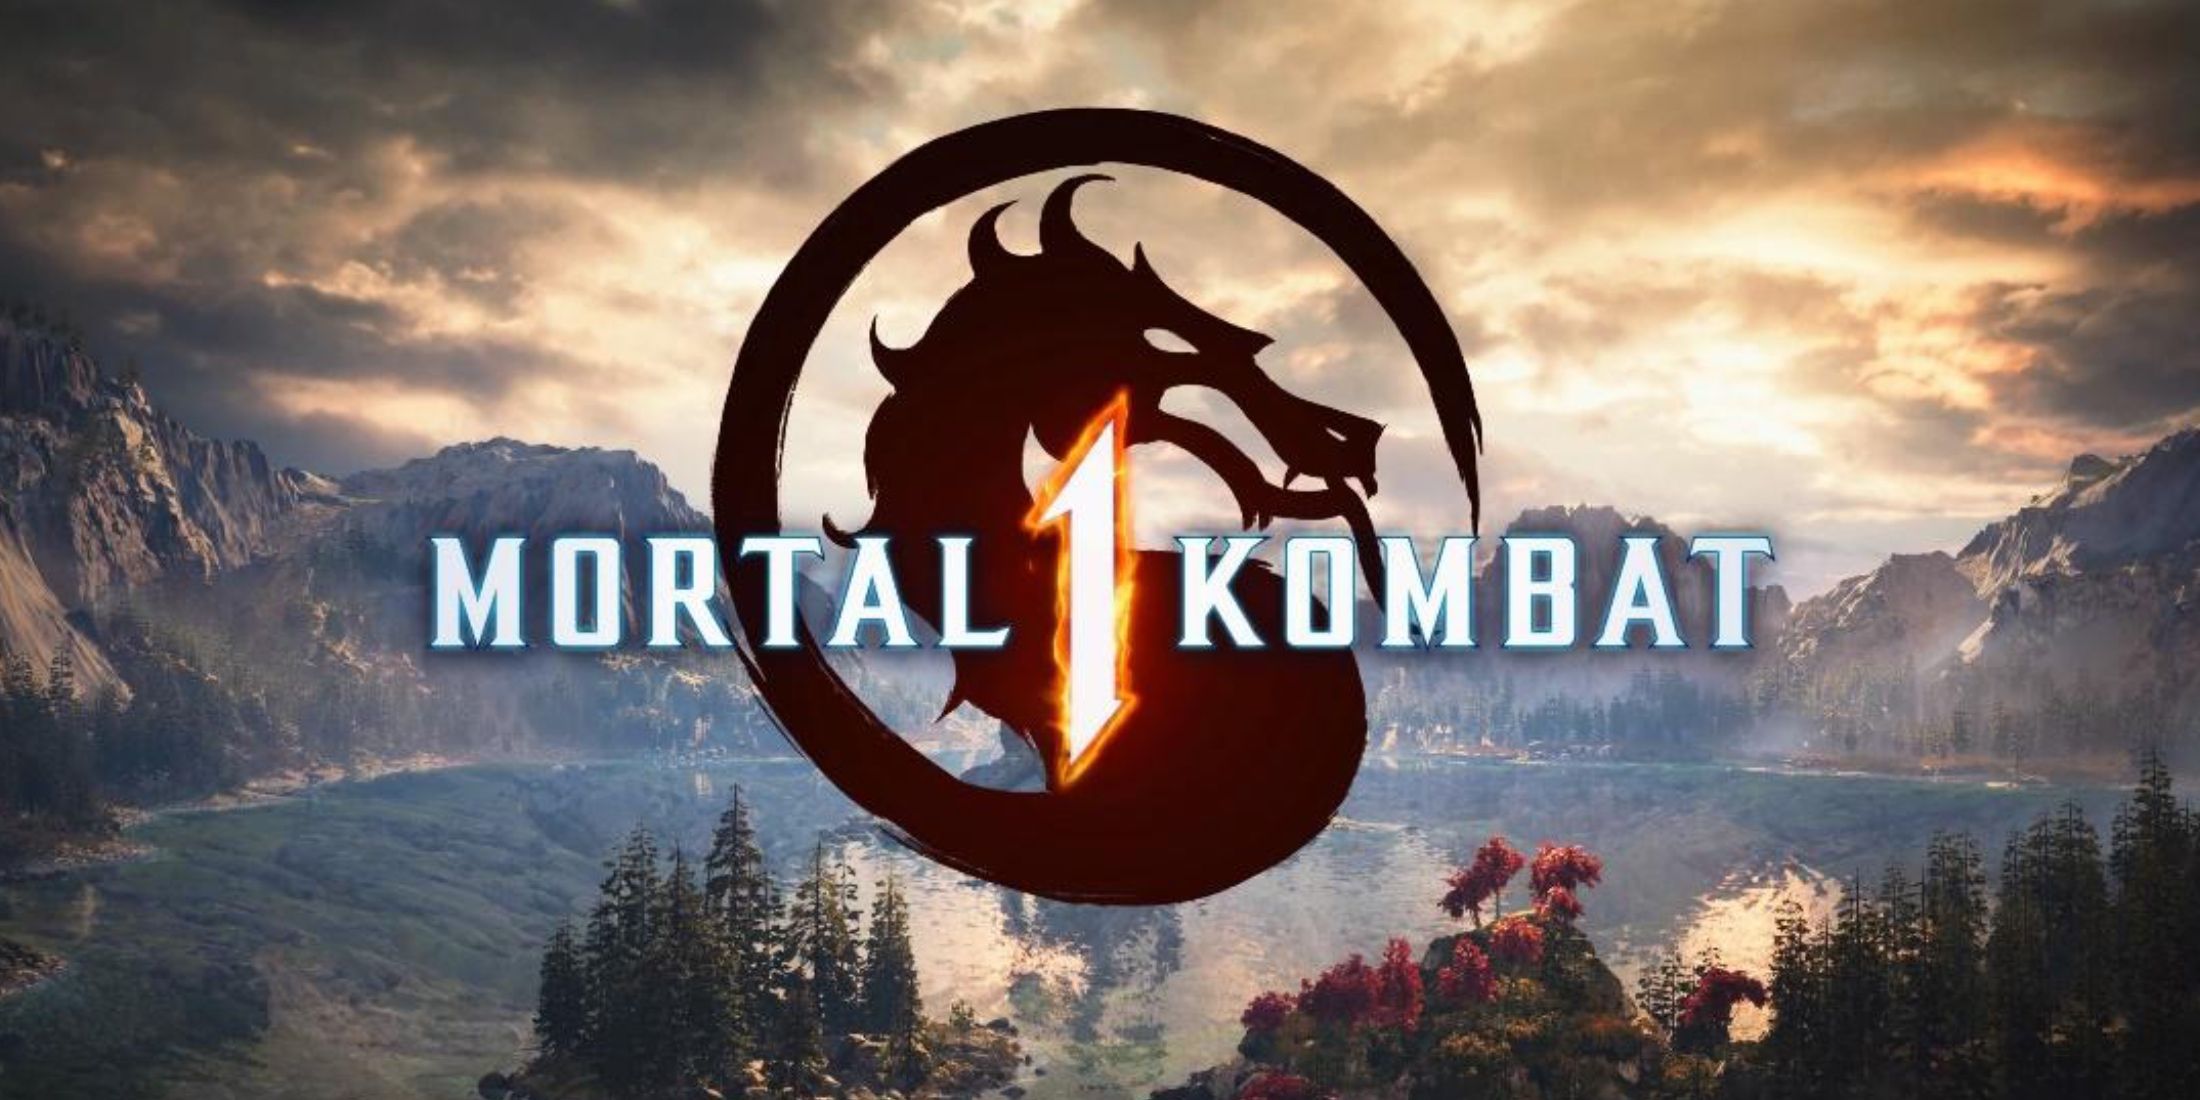 mortal-kombat-1-logo-landscape-background